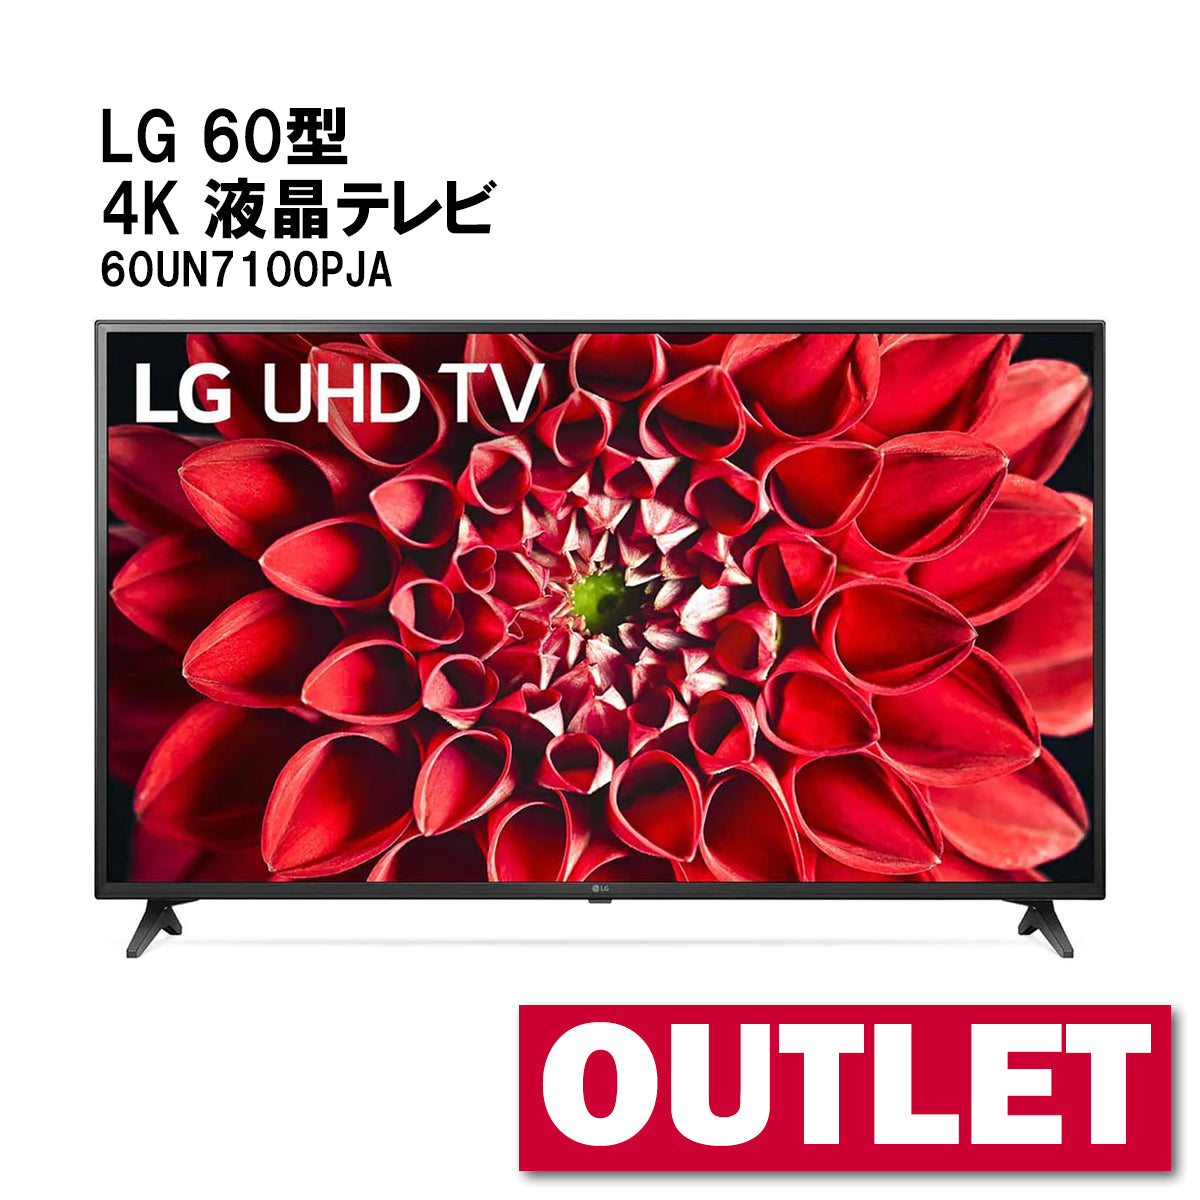 LG 60V型 液晶テレビ 60UN7100-